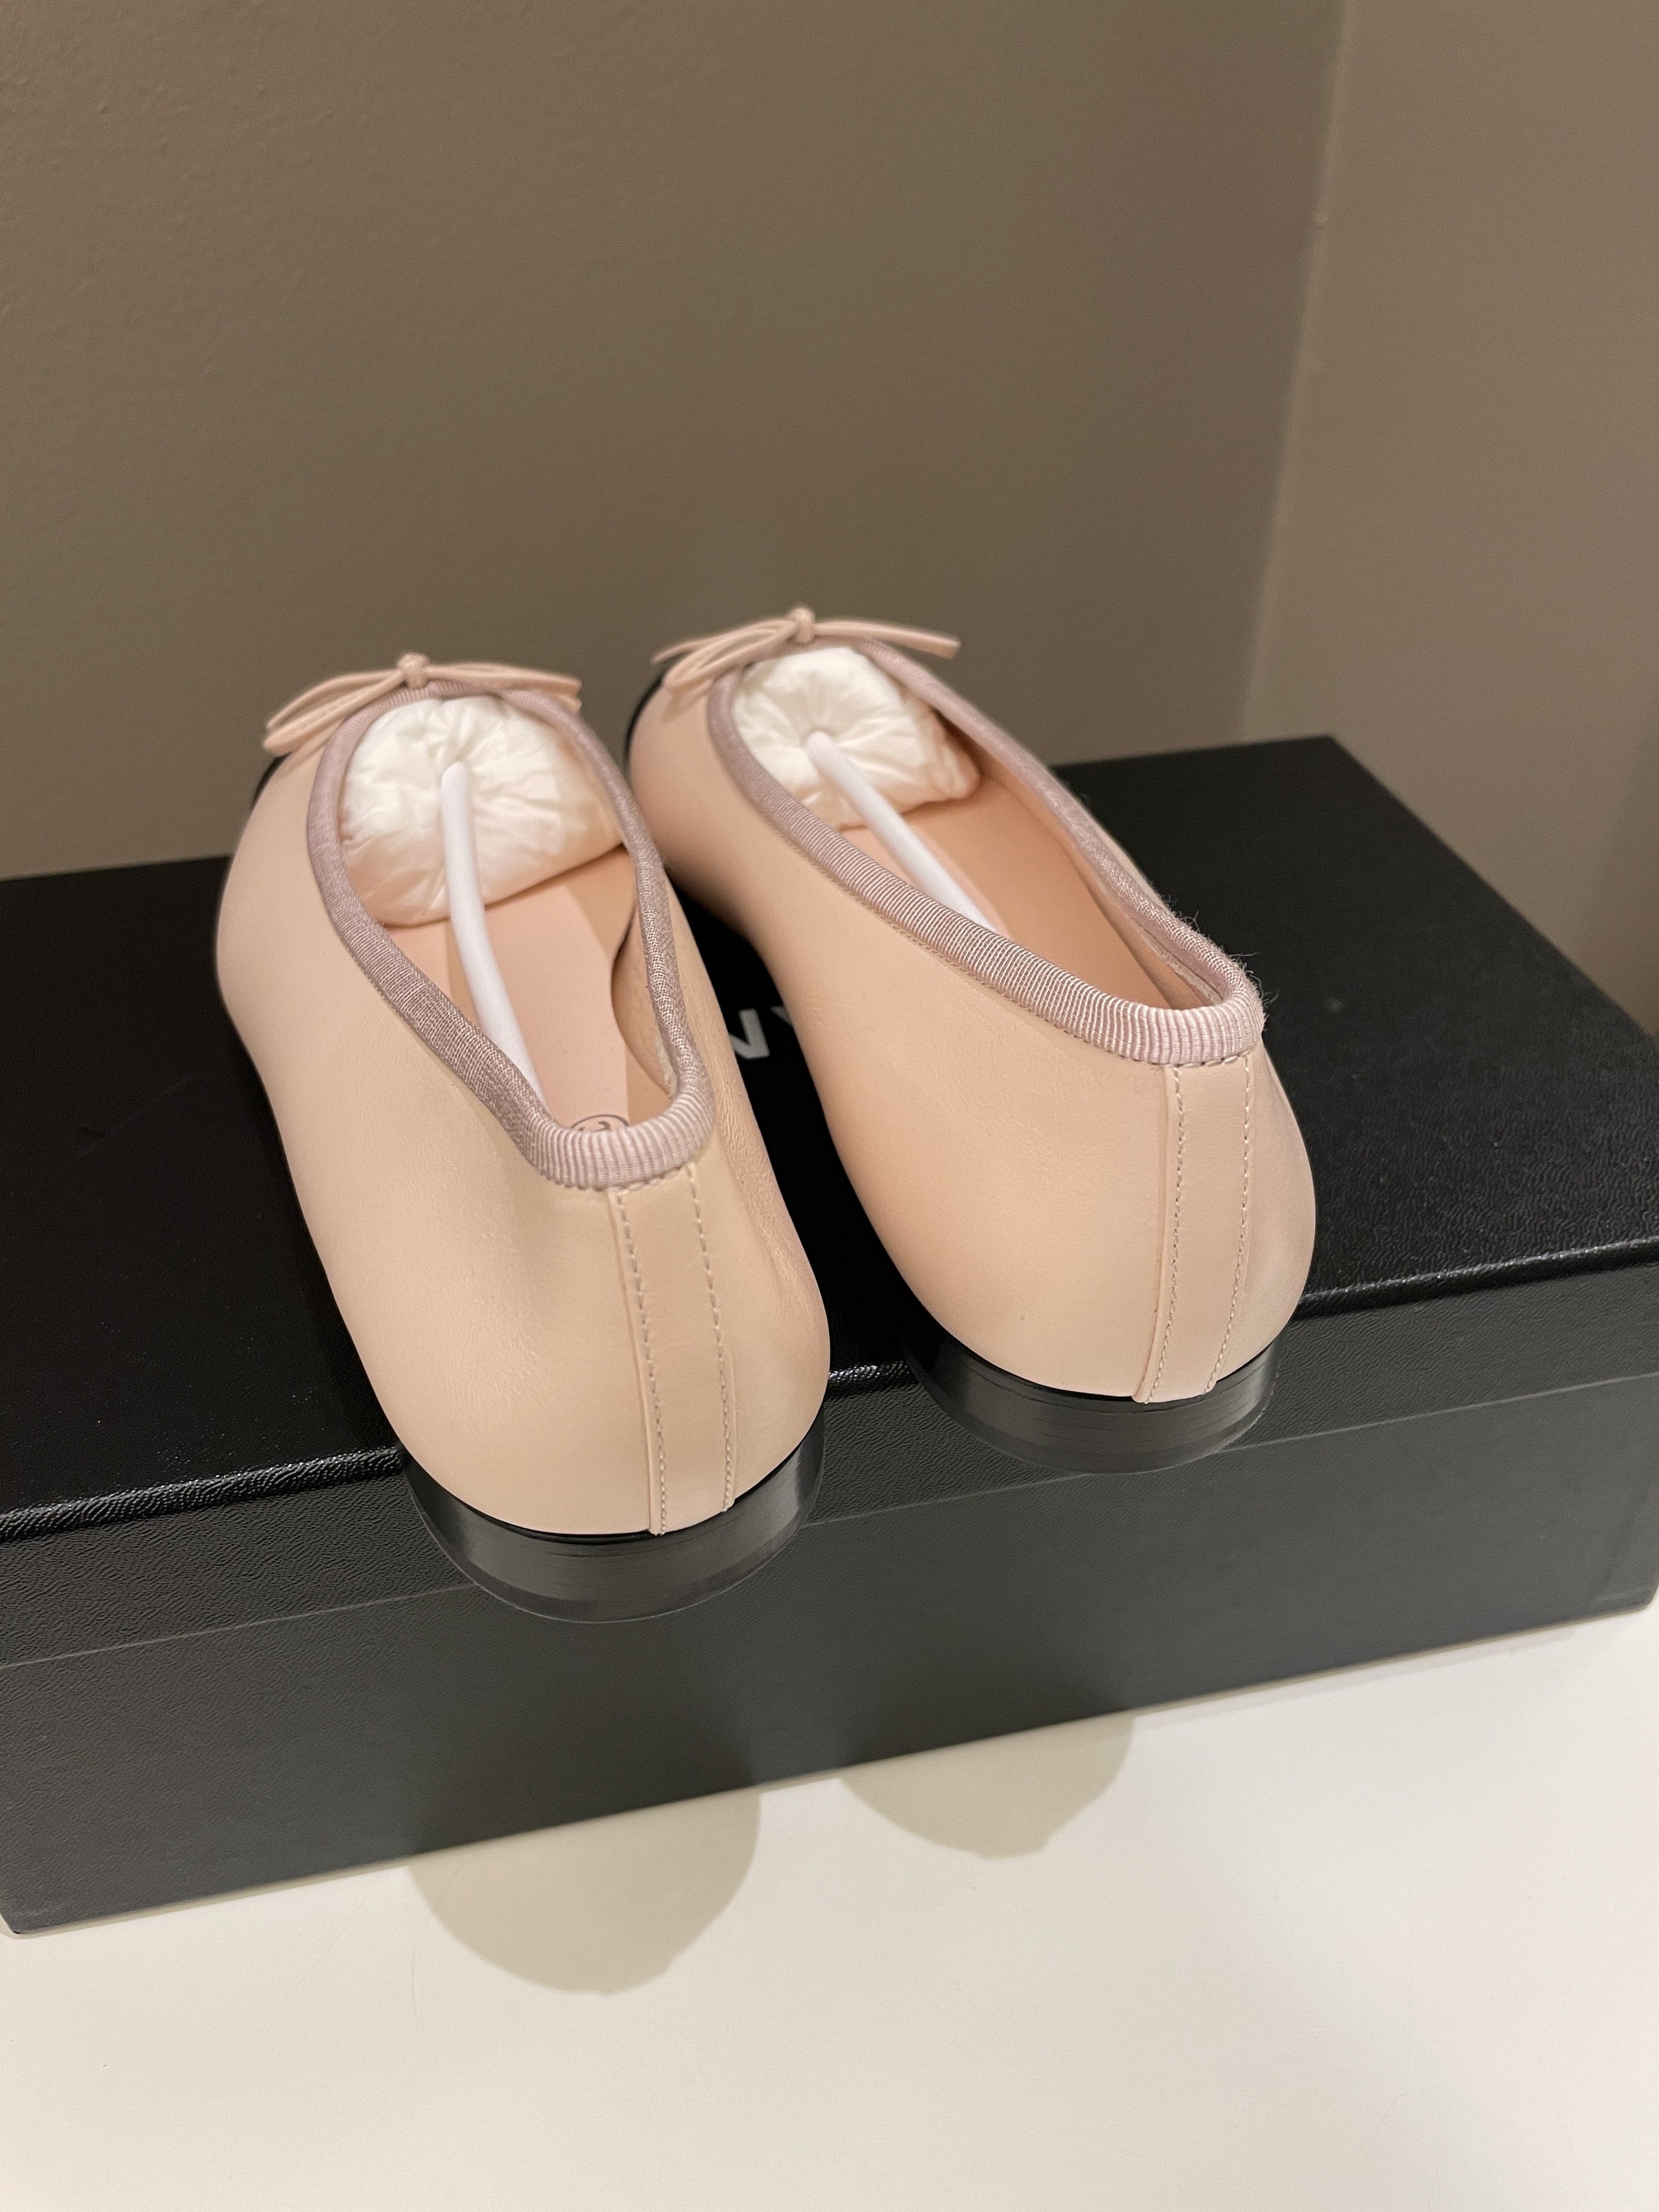 Chanel Classic Ballerina Flats 
Blush / Black Size 36